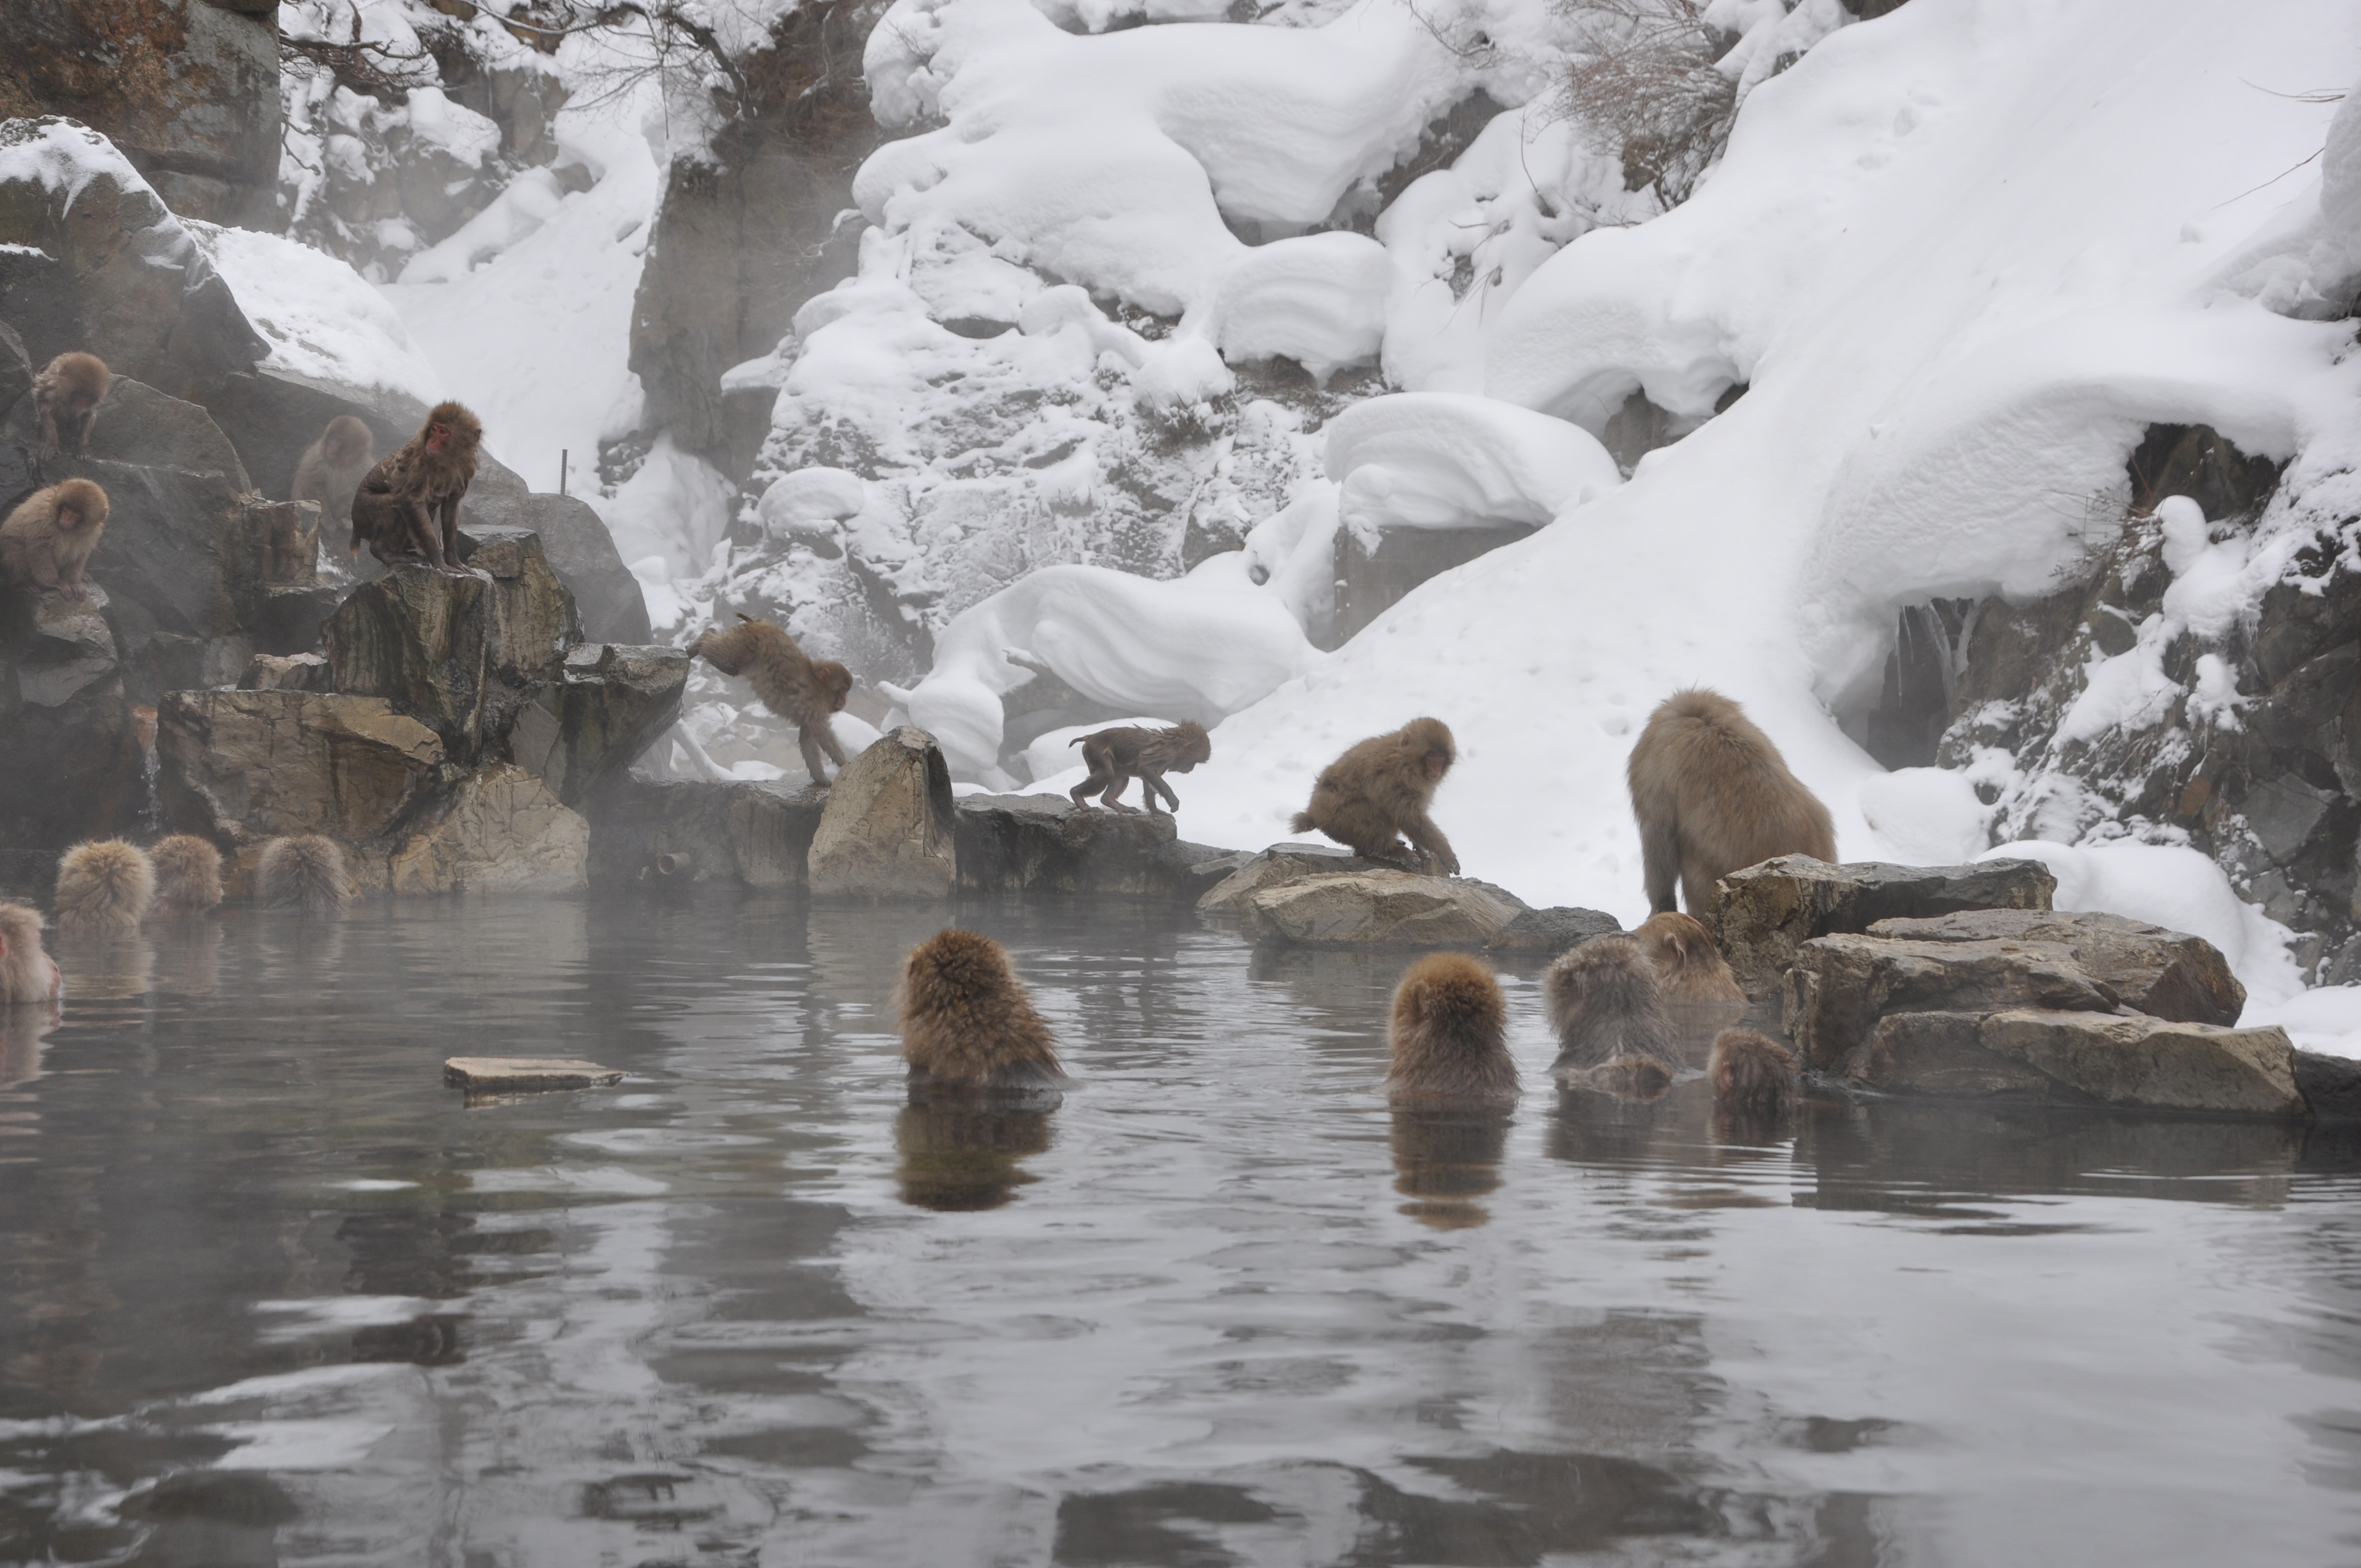 Snow Monkeys in Japan Ultimate Guide for Visiting Jigokudani Snow